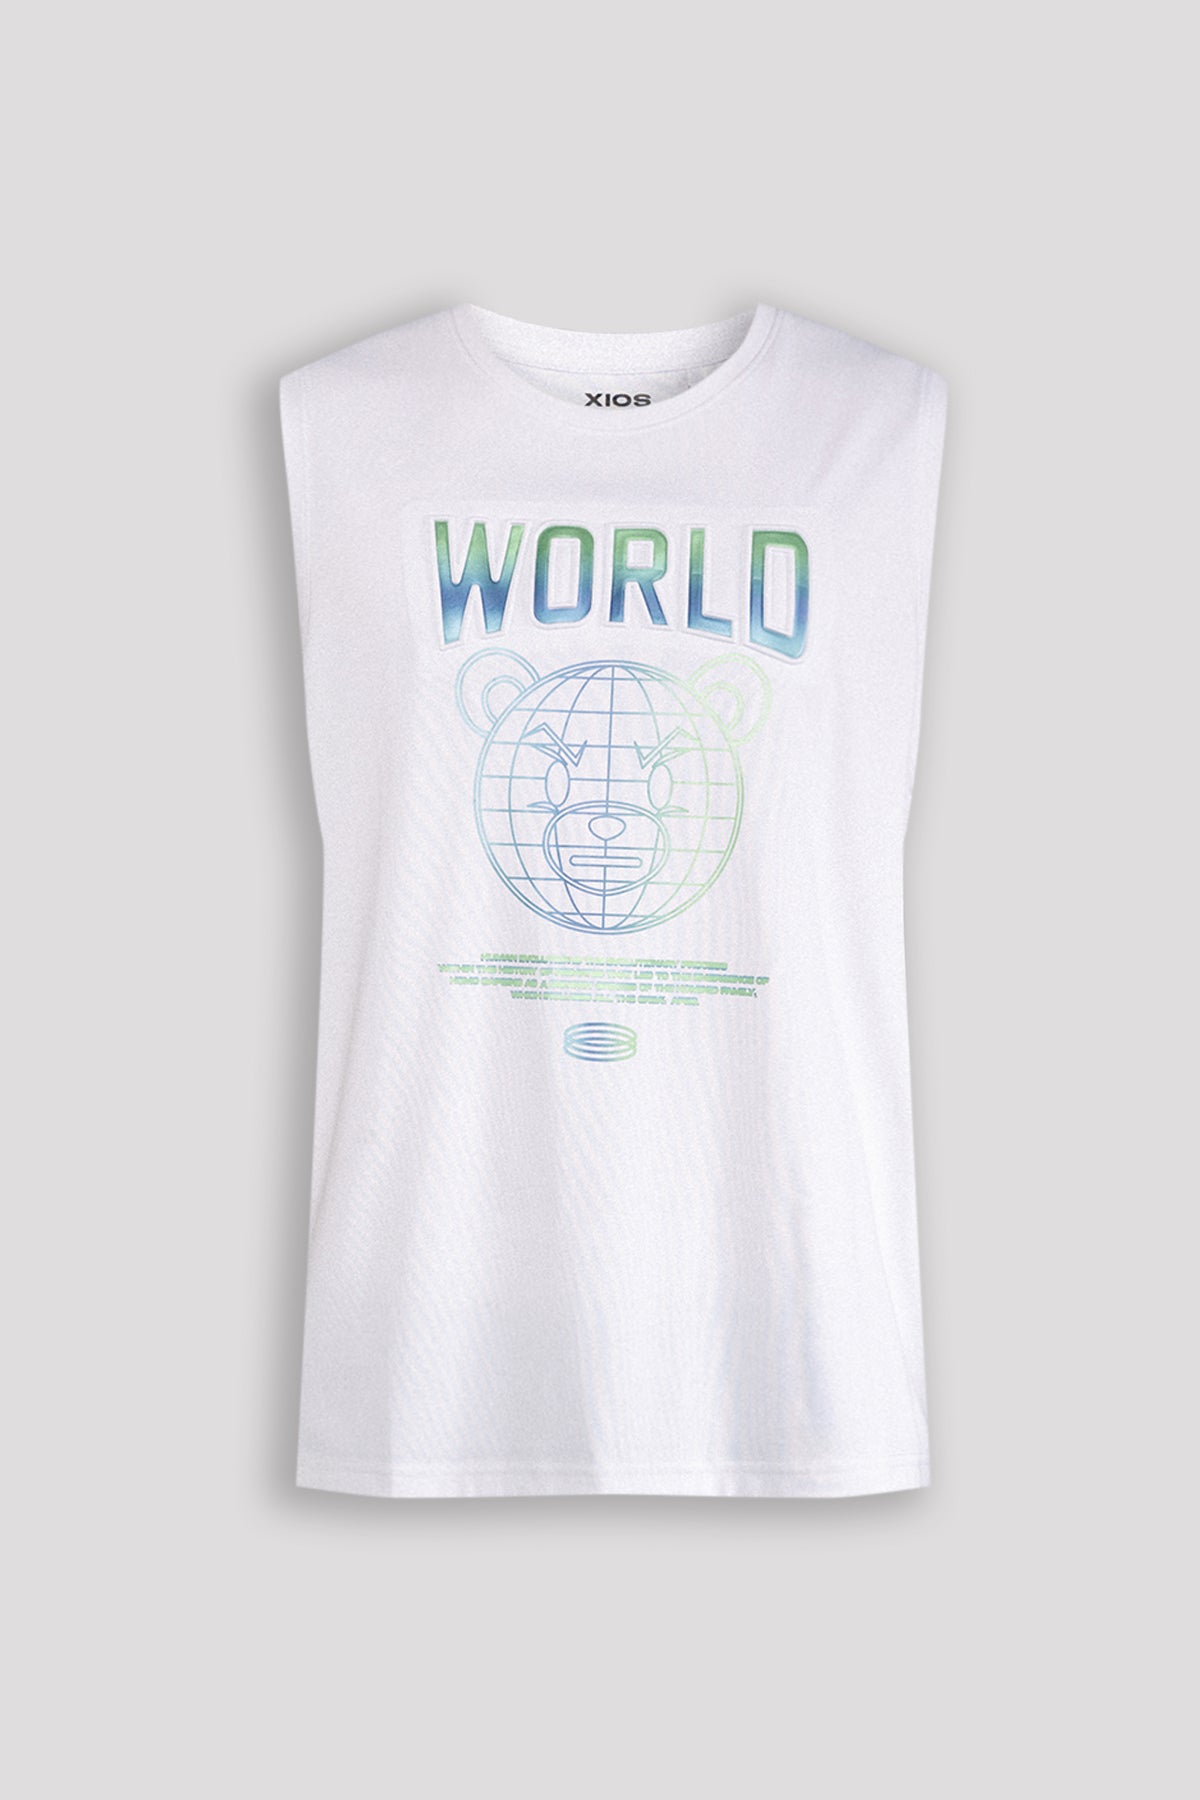 "World" Muscle Shirt